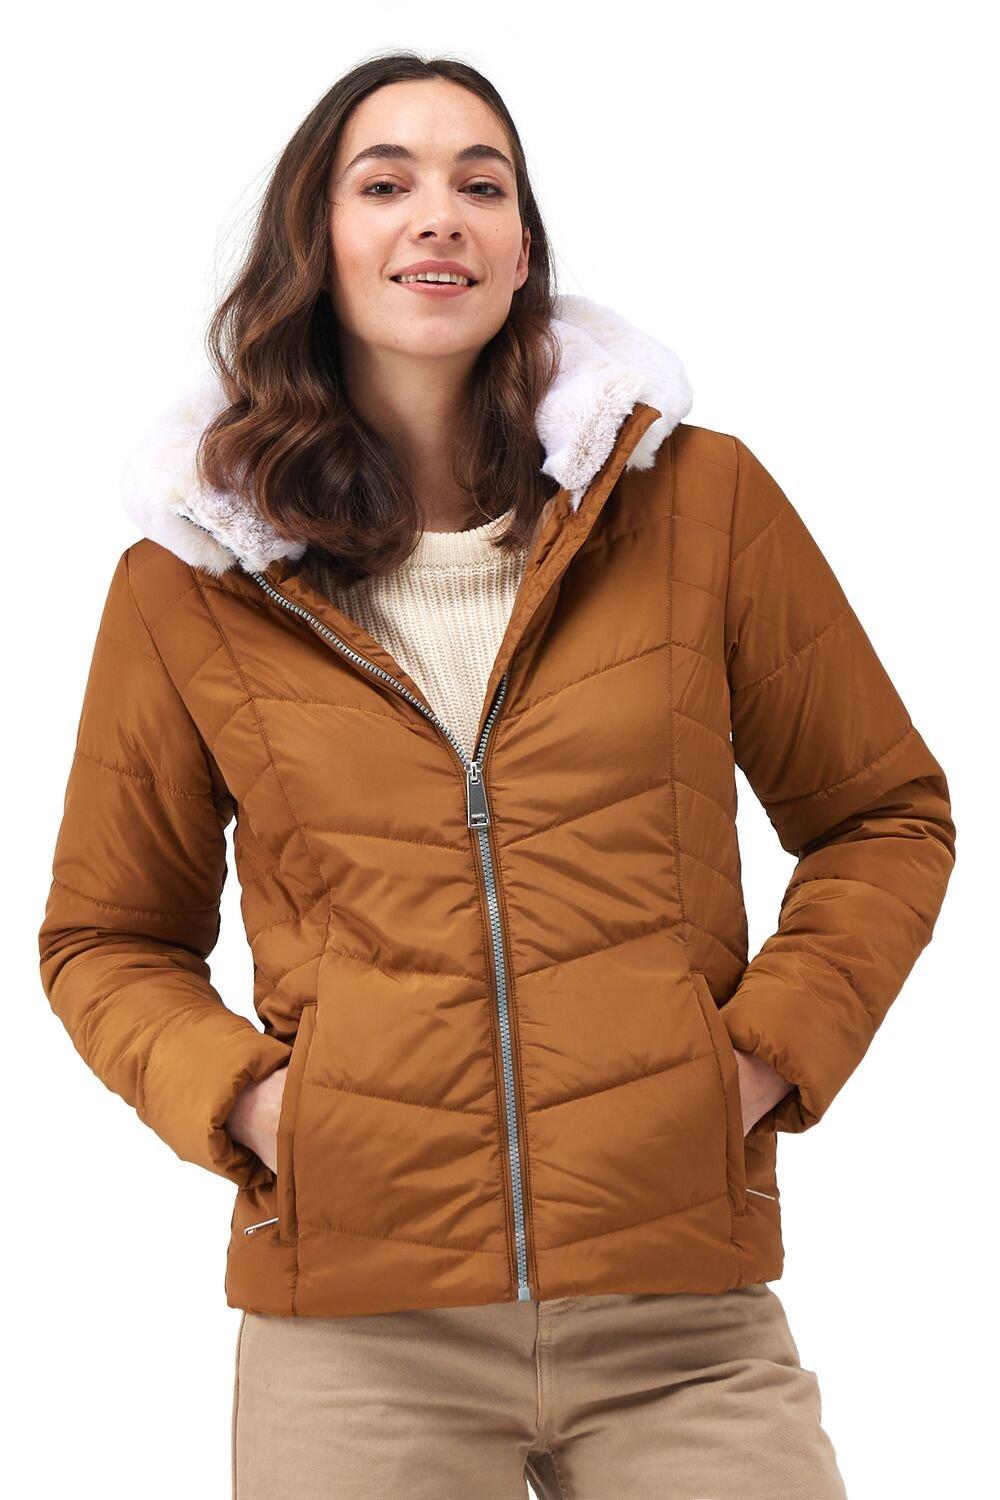 fletcher giovanna the eve illusion Прочная утепленная куртка с перегородками Thermoguard Wildrose Regatta, бежевый